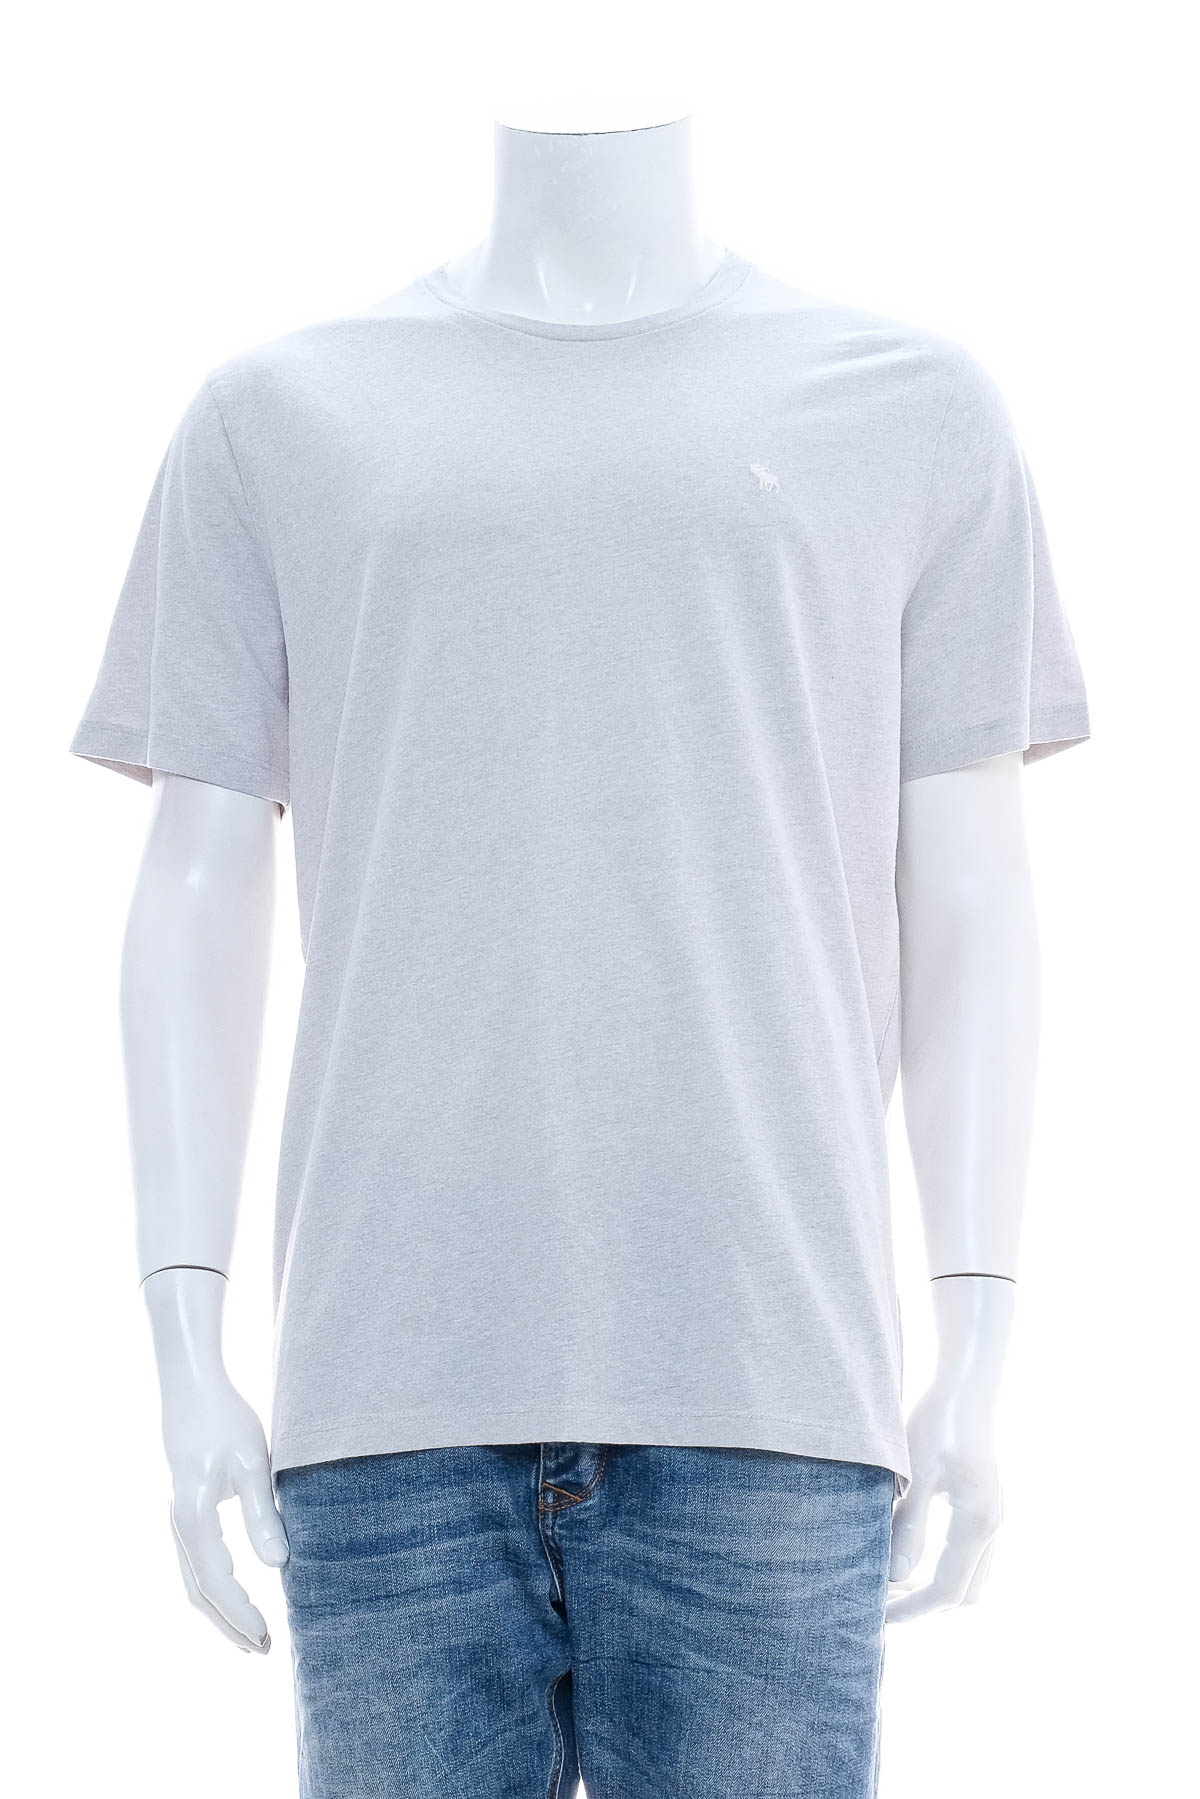 Men's T-shirt - Abercrombie & Fitch - 0